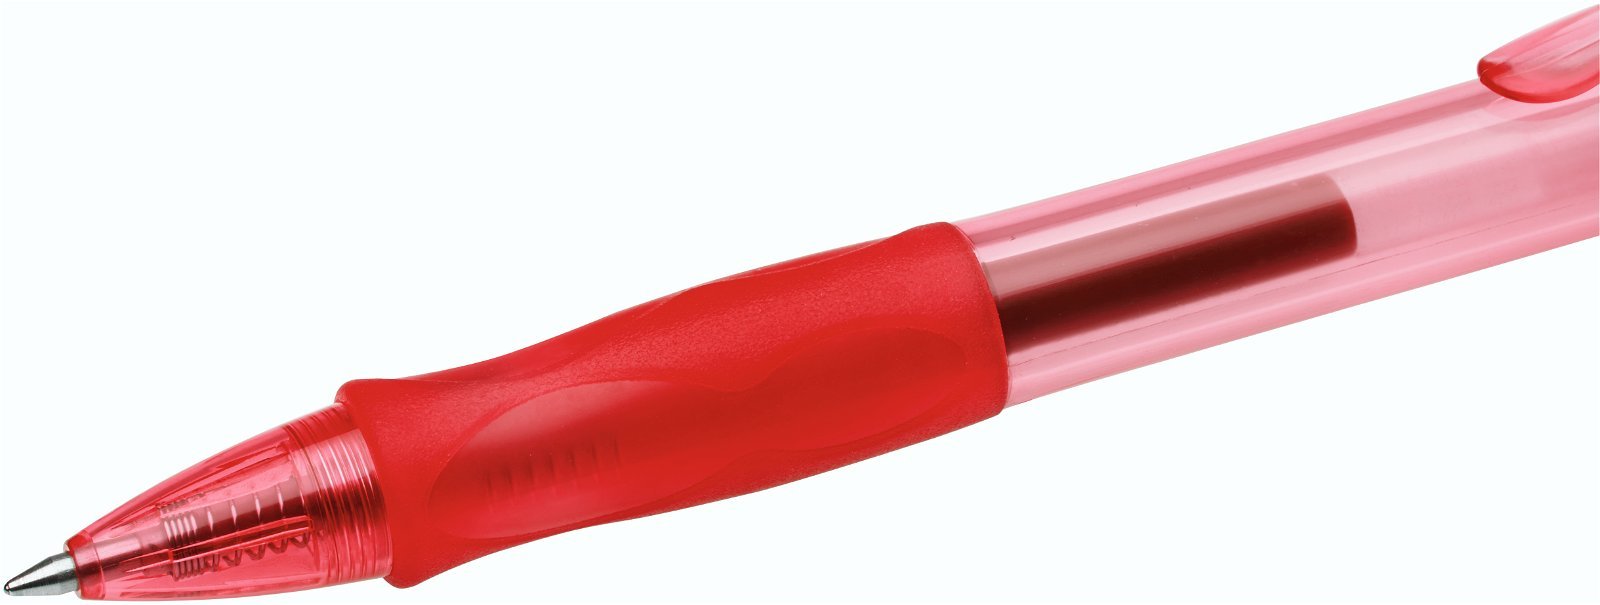 BIC Gel-ocity gelpen 0,35mm rød